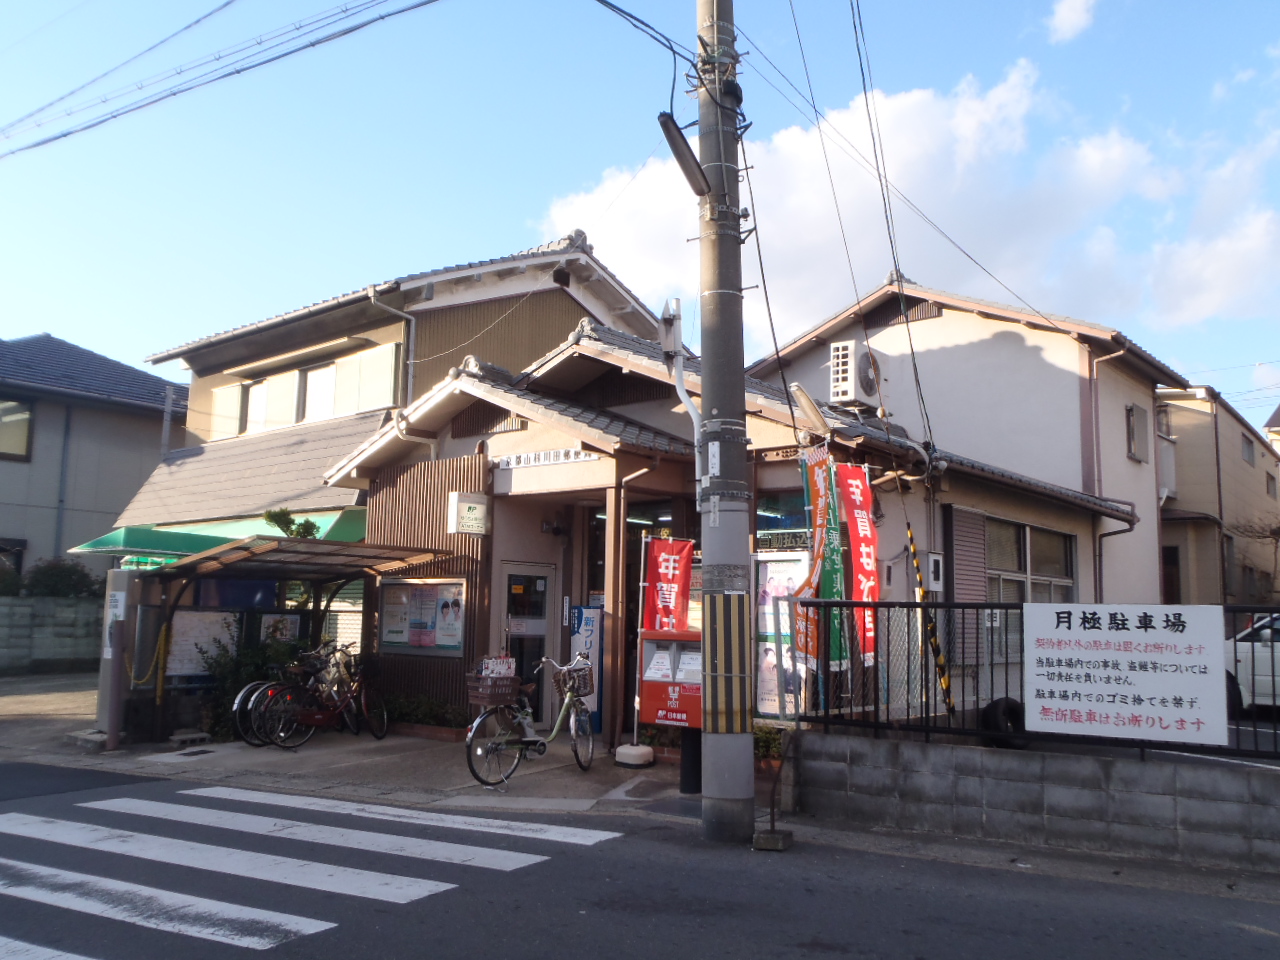 post office. 250m to Yamashina Kawada post office (post office)